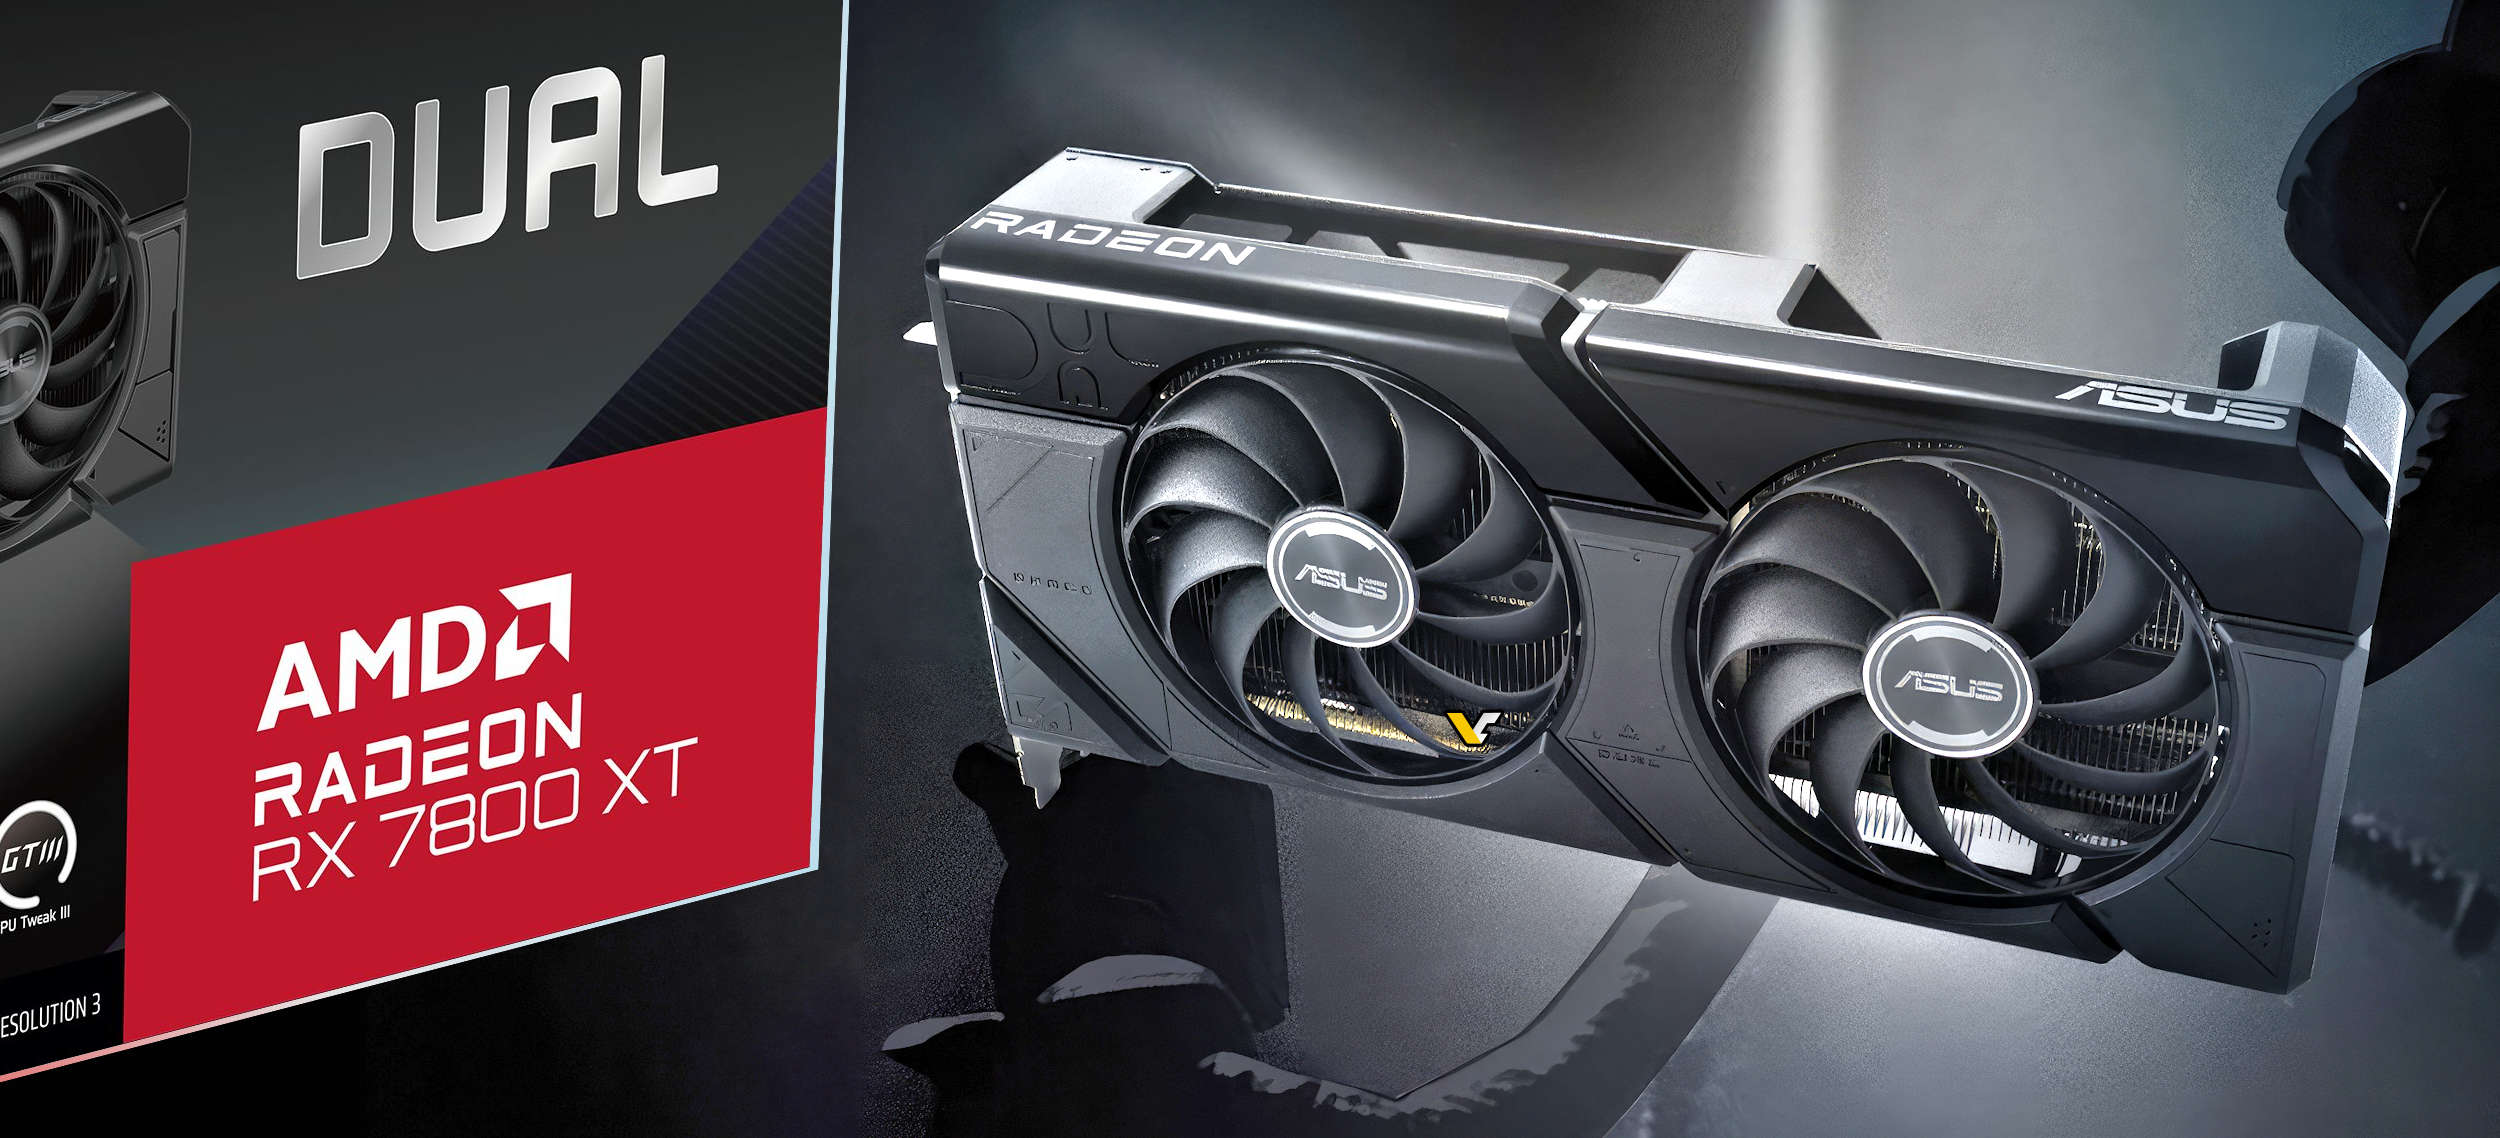 AMD RX 7800XT review